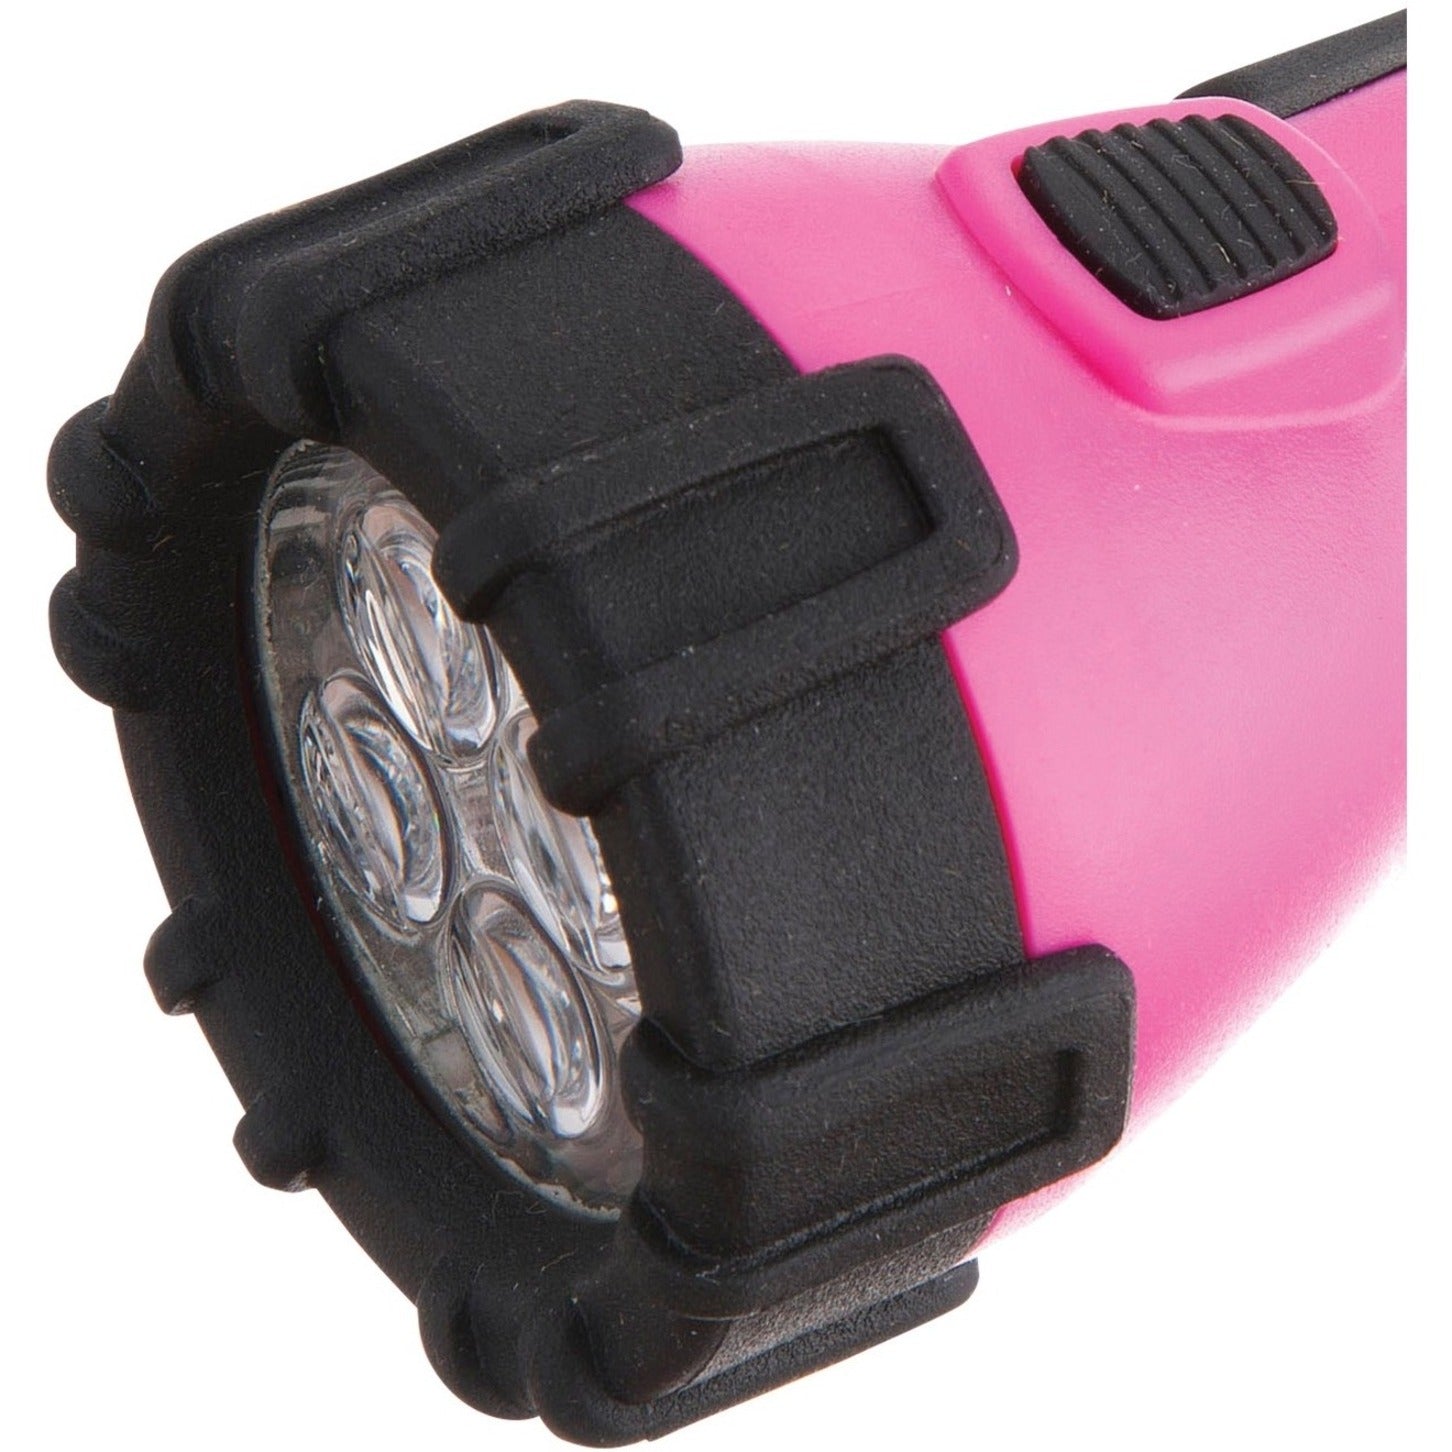 Dorcy 41-2509 55 Lumen Floating Pink Flashlight, Water Proof, Shock Absorbing, Slip Resistant